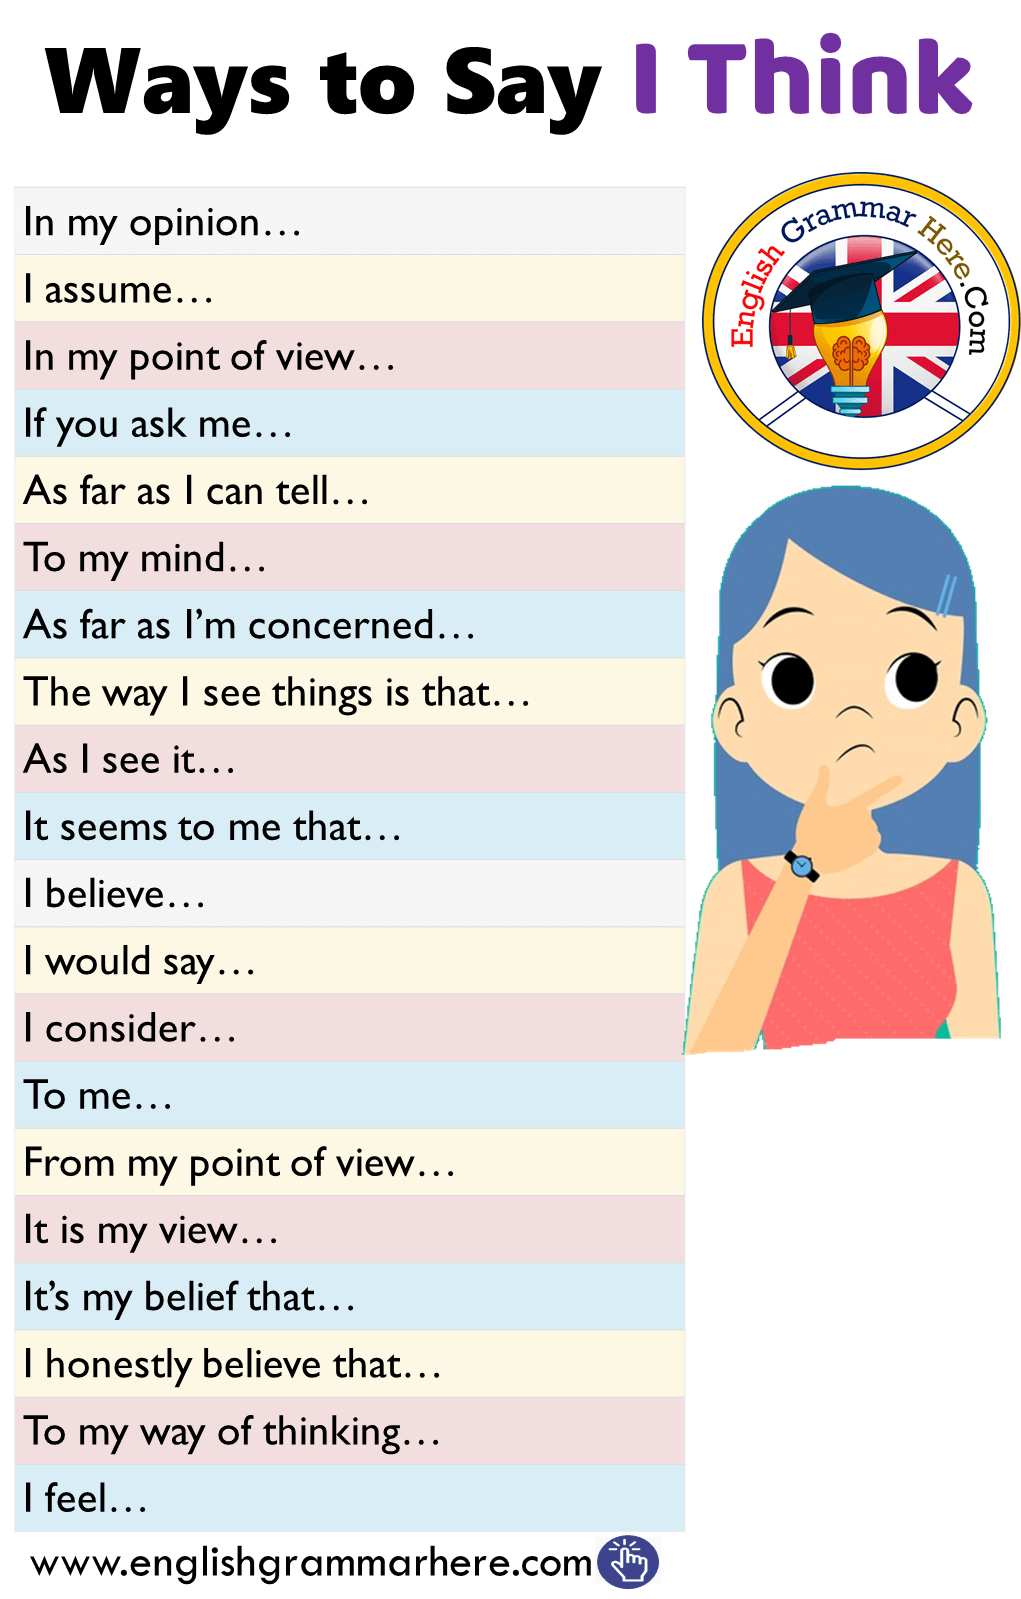 English Ways to Say I Think